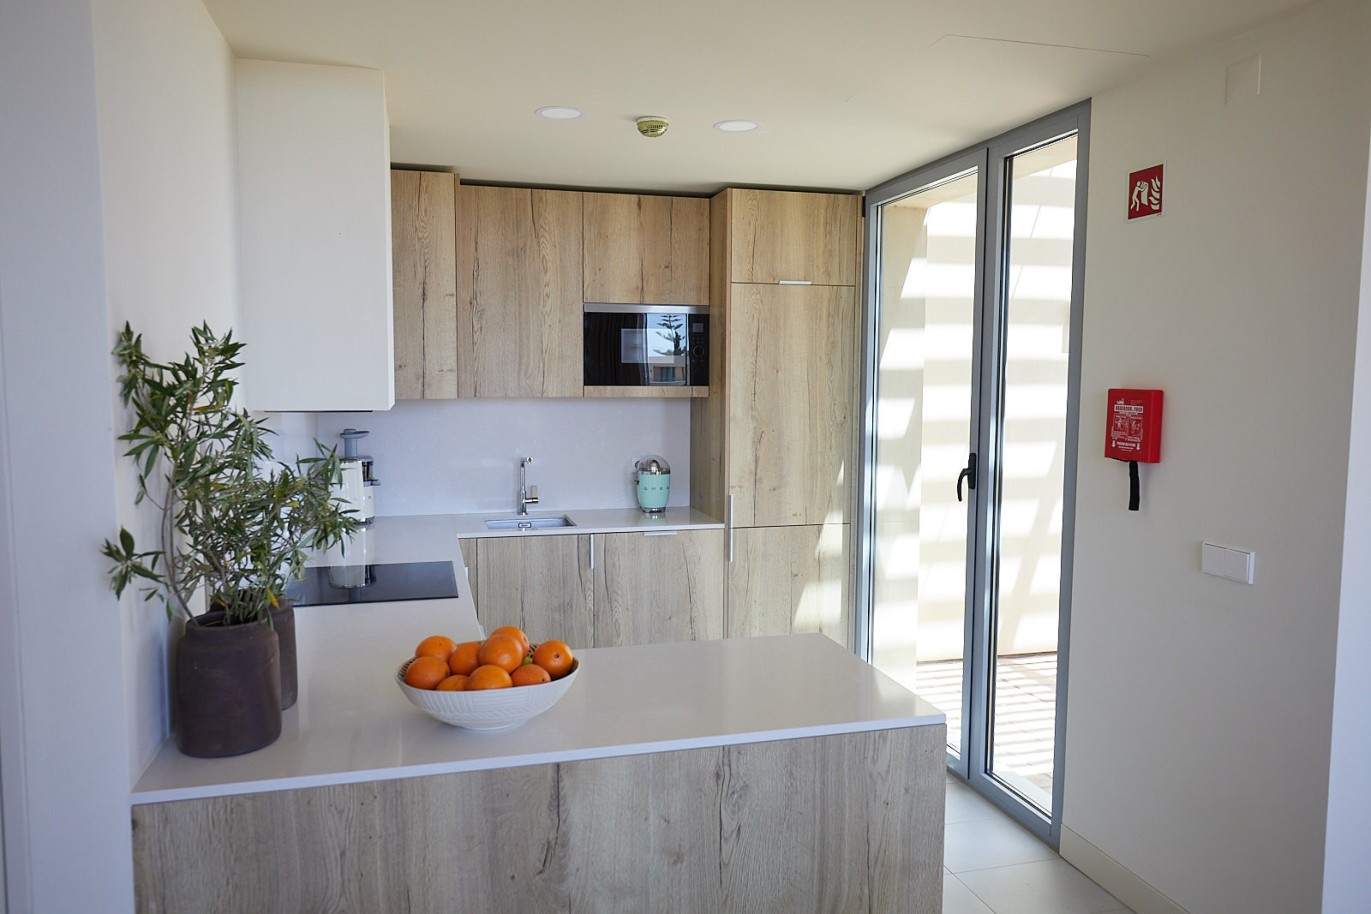 2 bedroom apartment in resort, for sale in Porches, Algarve_229124